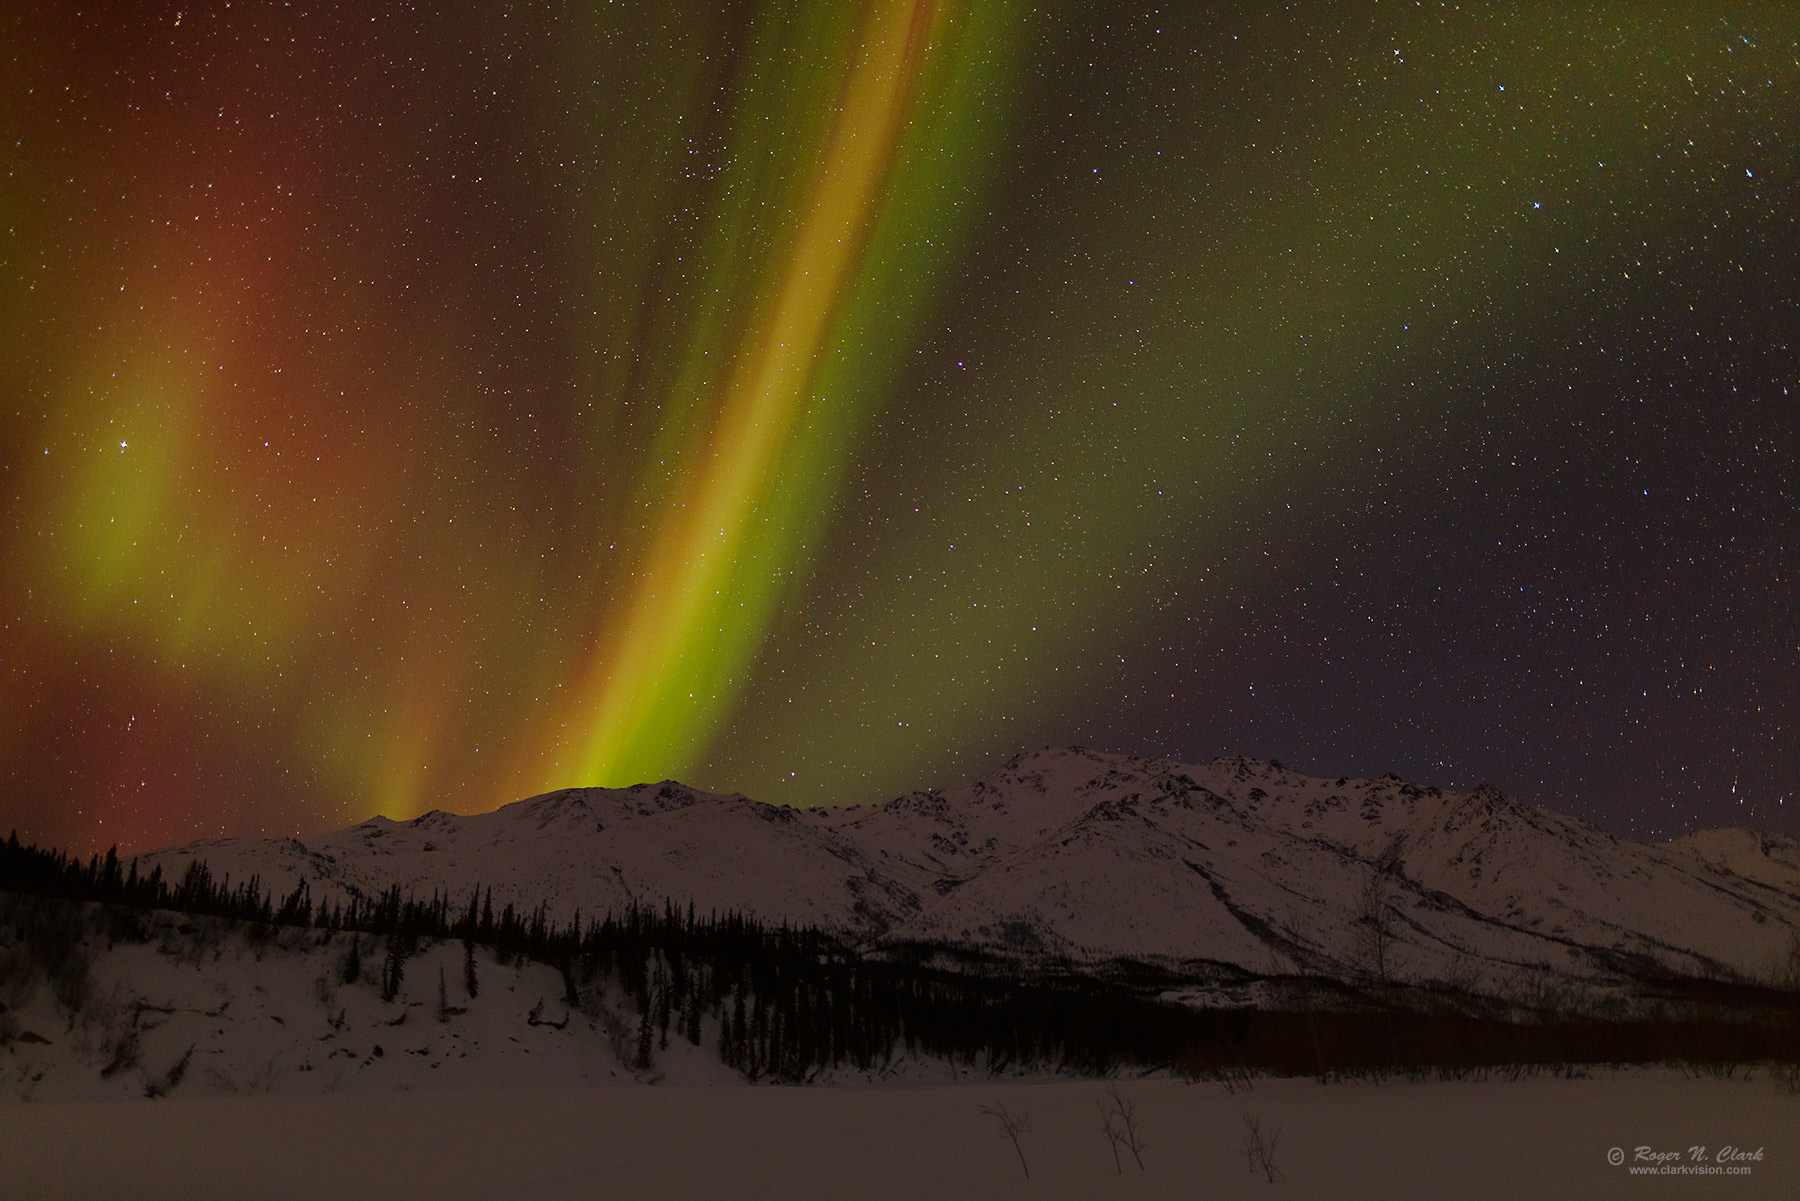 image aurora-c03.21-22.2022-alaska-rnclark-4C3A5050.b-1800s.jpg is Copyrighted by Roger N. Clark, www.clarkvision.com